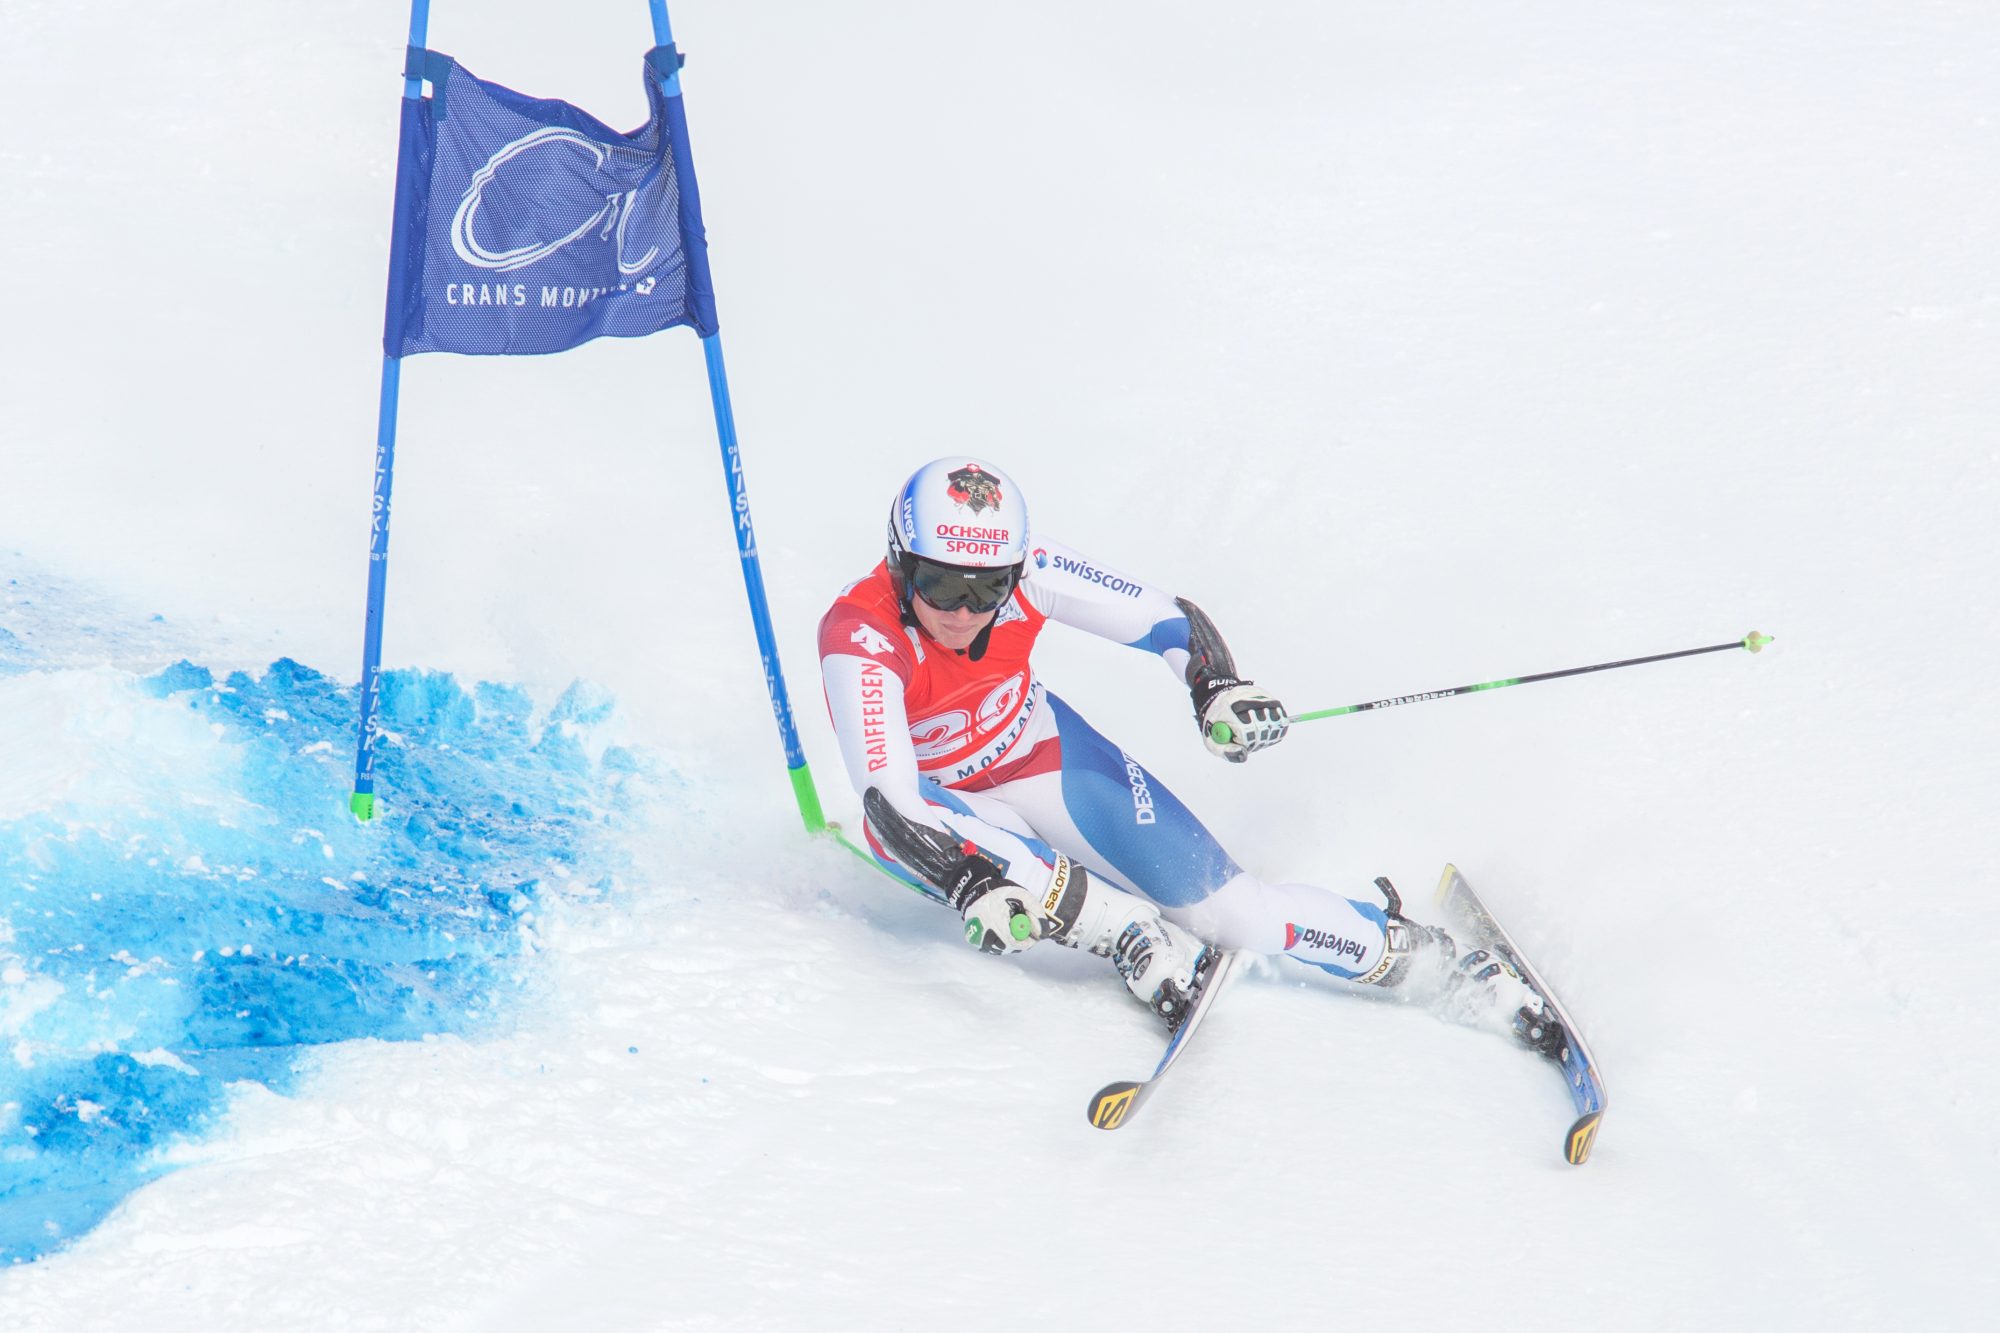 The European Ski Cup- Photo Luciano Miglionico - Courtesy: Crans Montana Tourism Office. 